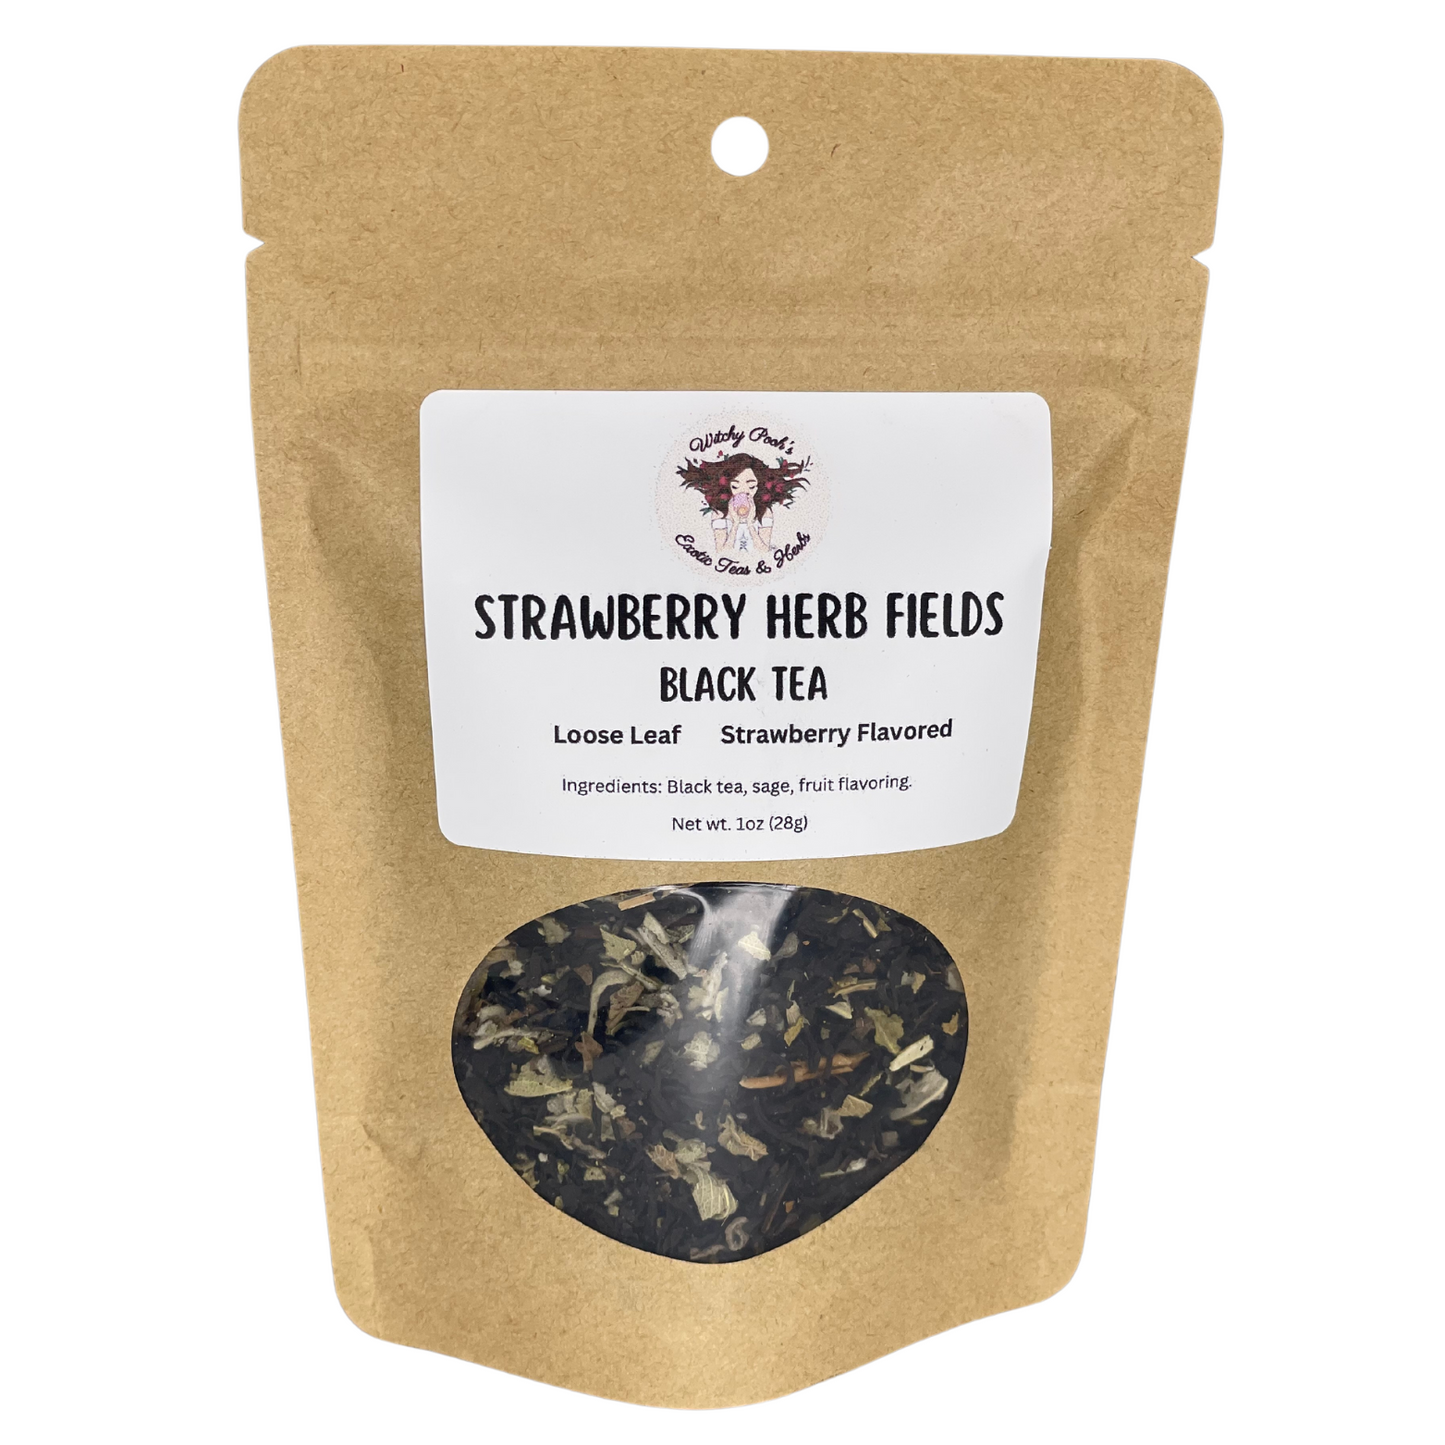 Strawberry Herb Fields Strawberry Flavored Black Loose Leaf Tea with Sage Leaf